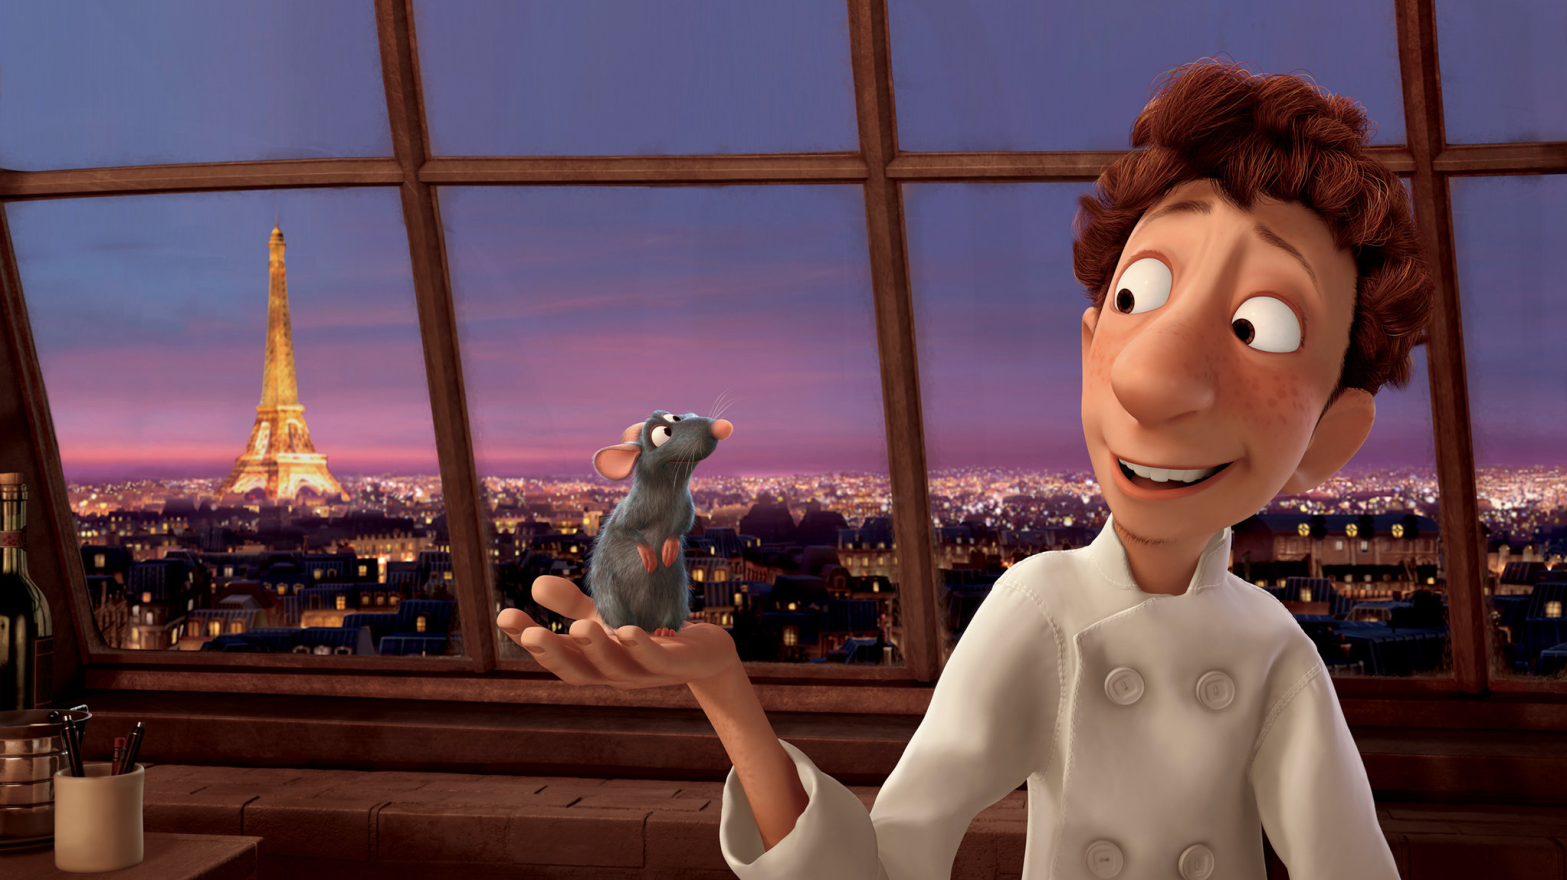 From Ratatouille.  (Image: Disney/Pixar)